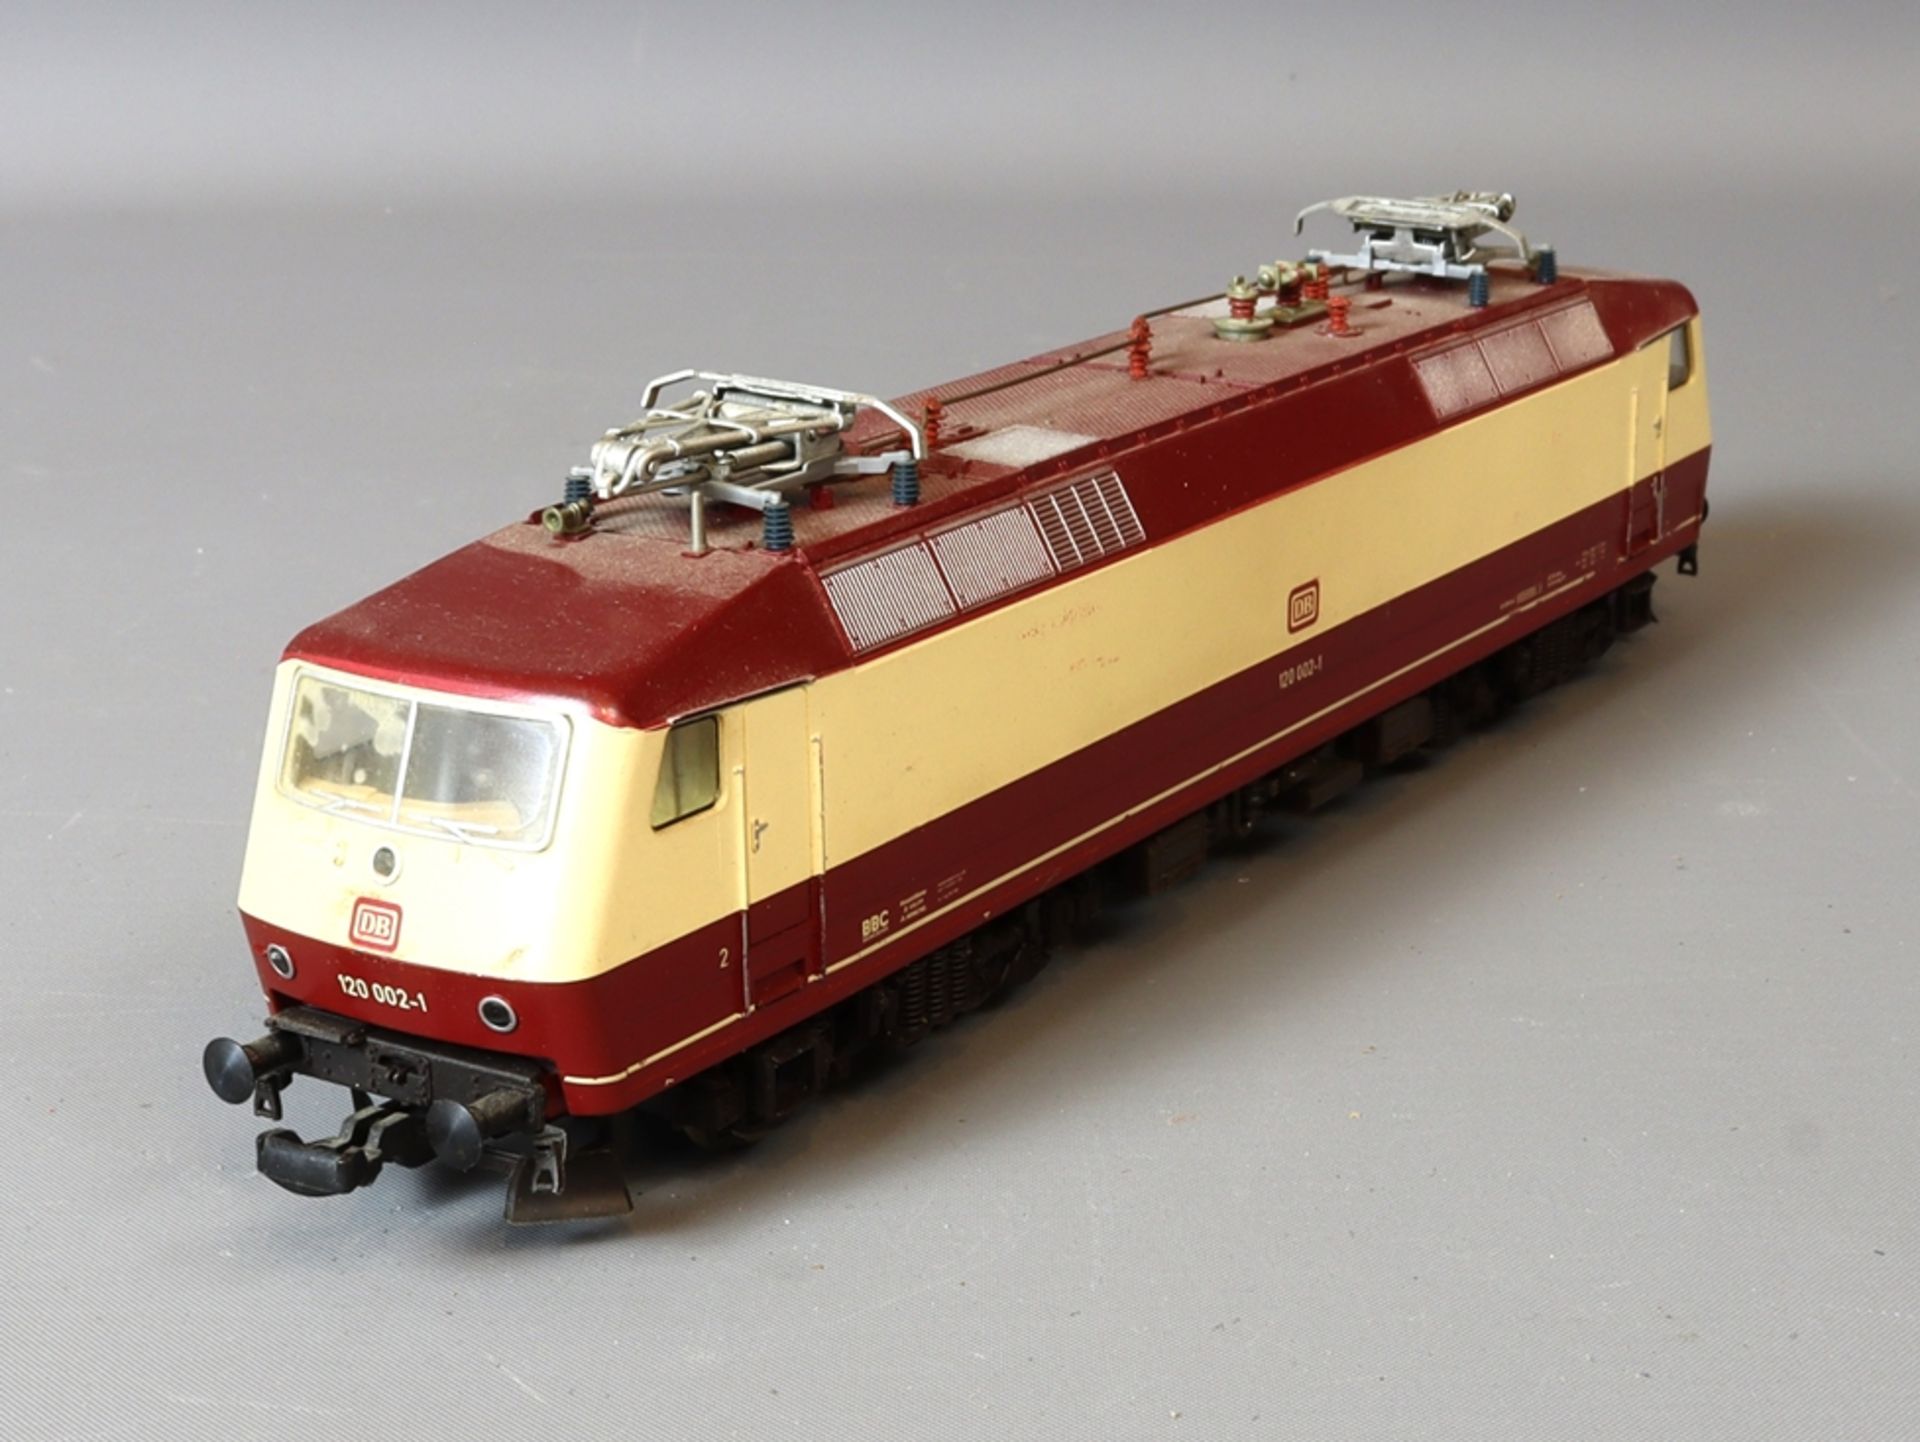 Fleischmann electric locomotive 120 002-1, second half of the 20th century, German - Image 2 of 3